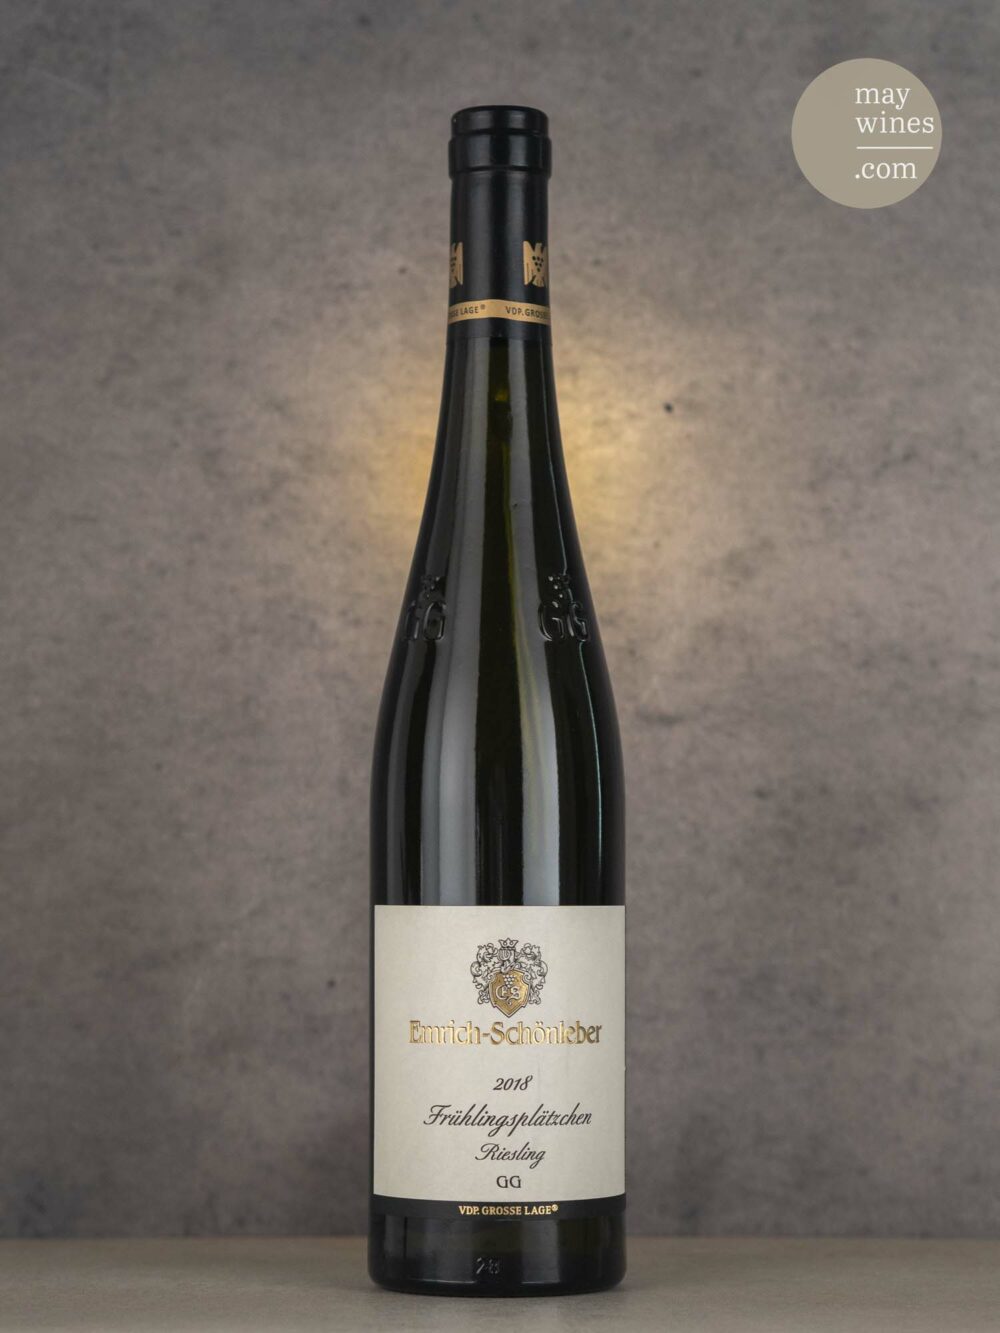 May Wines – Weißwein – 2018 Frühlingsplätzchen Riesling GG - Emrich-Schönleber